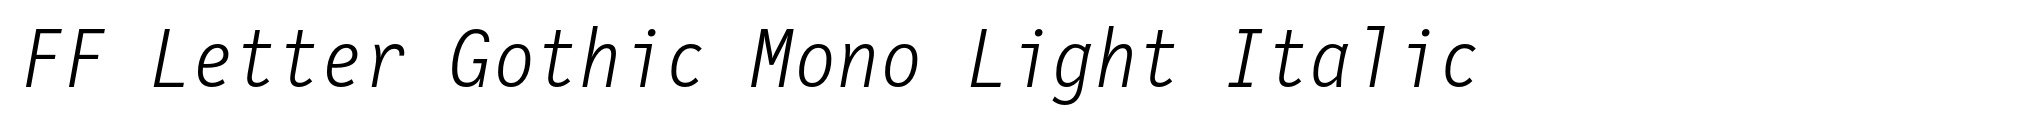 FF Letter Gothic Mono Light Italic image